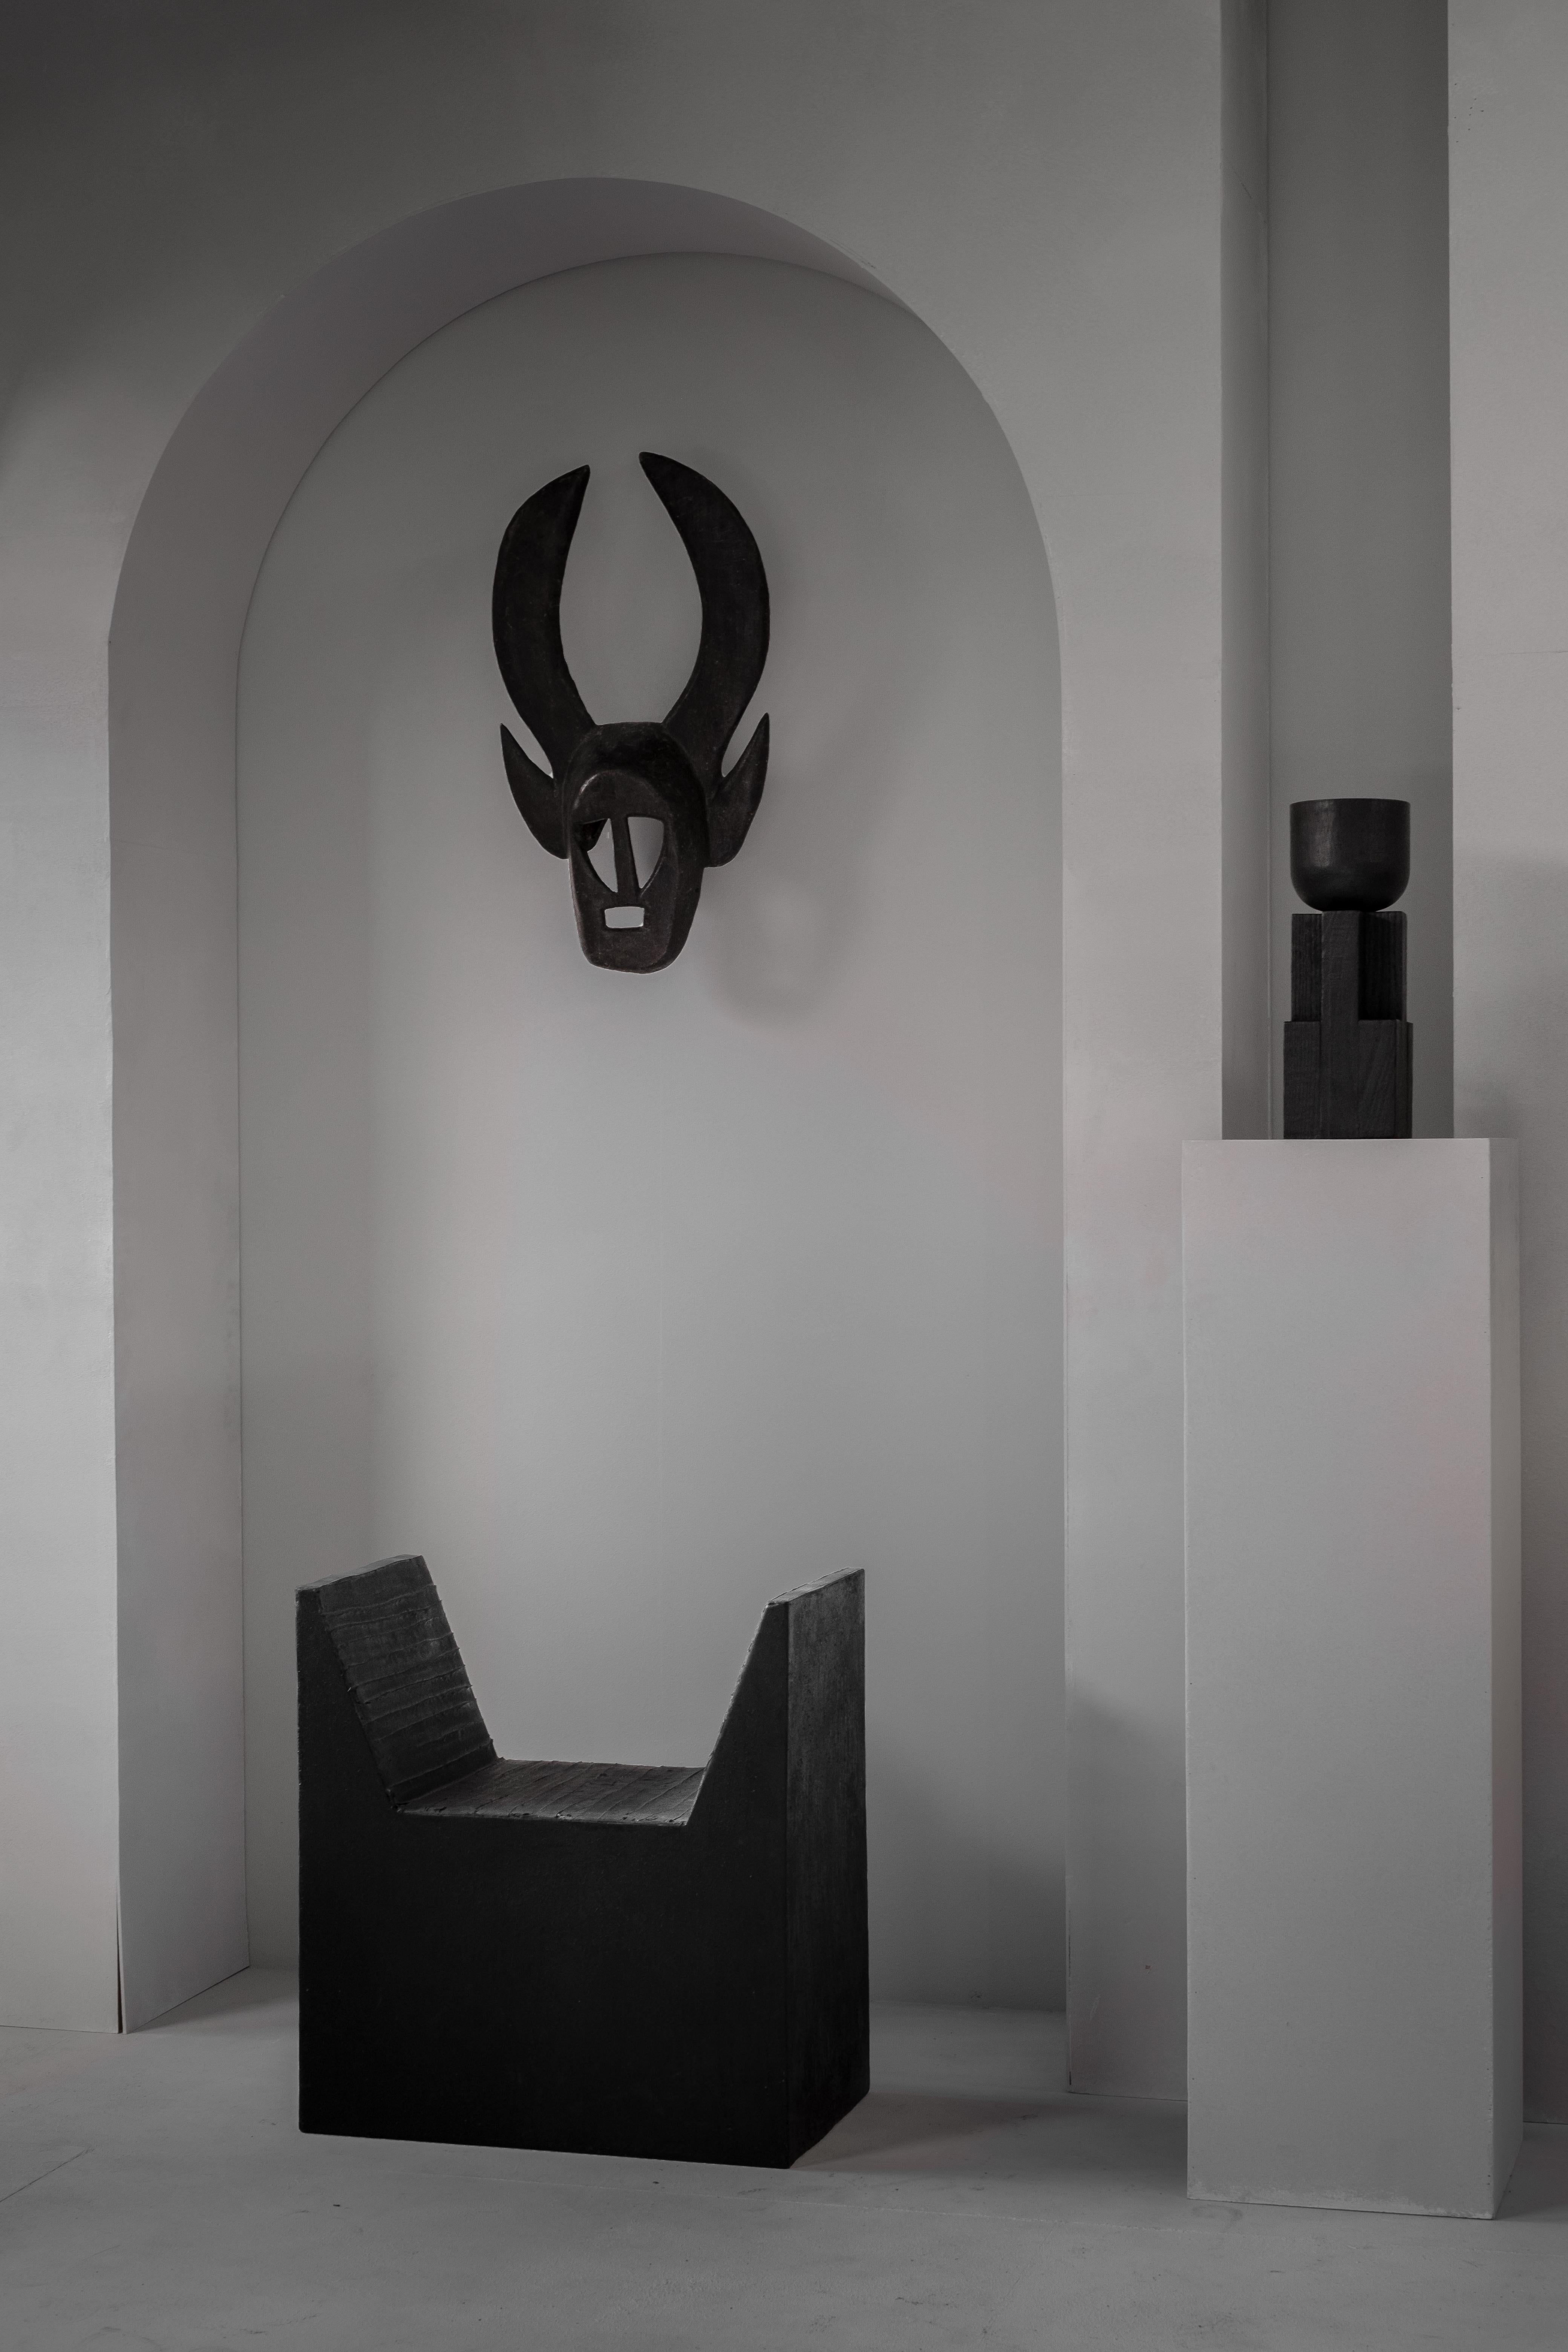 Sculptural stool - Arno Declercq

Measures: 
Small: 63 cm L x 38 cm W x 69 cm H
24,8” L x 15” W x 27